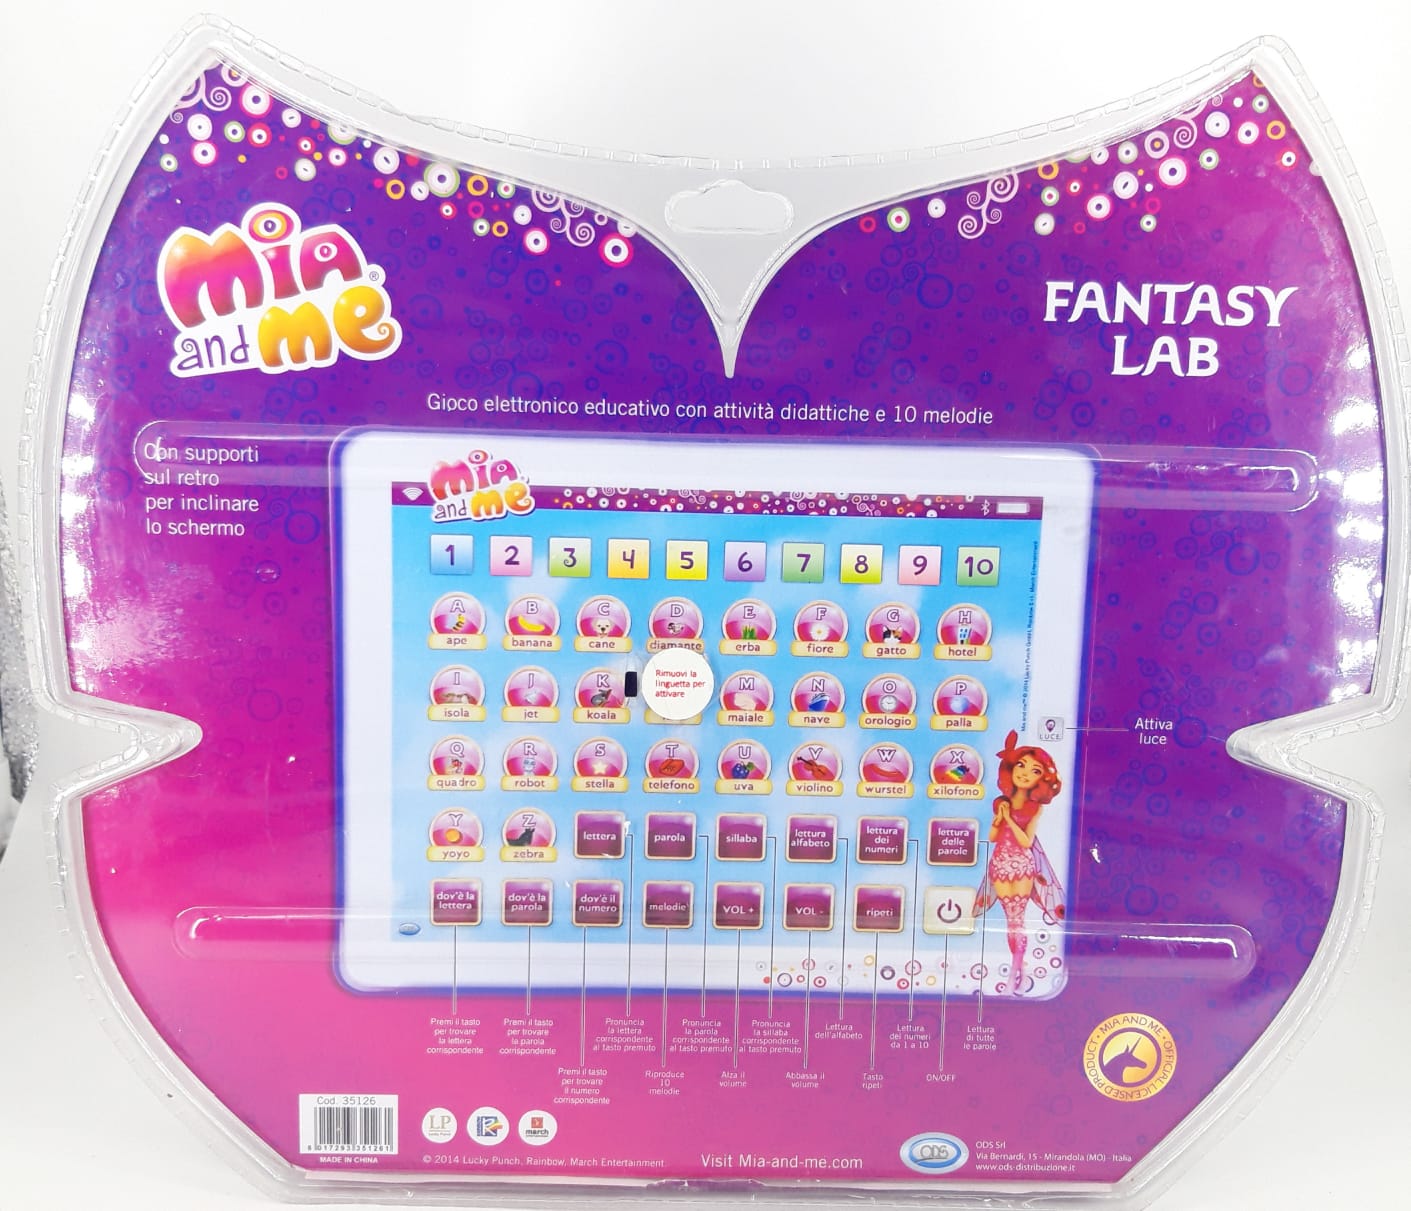 Fantasy lab Mia and Me